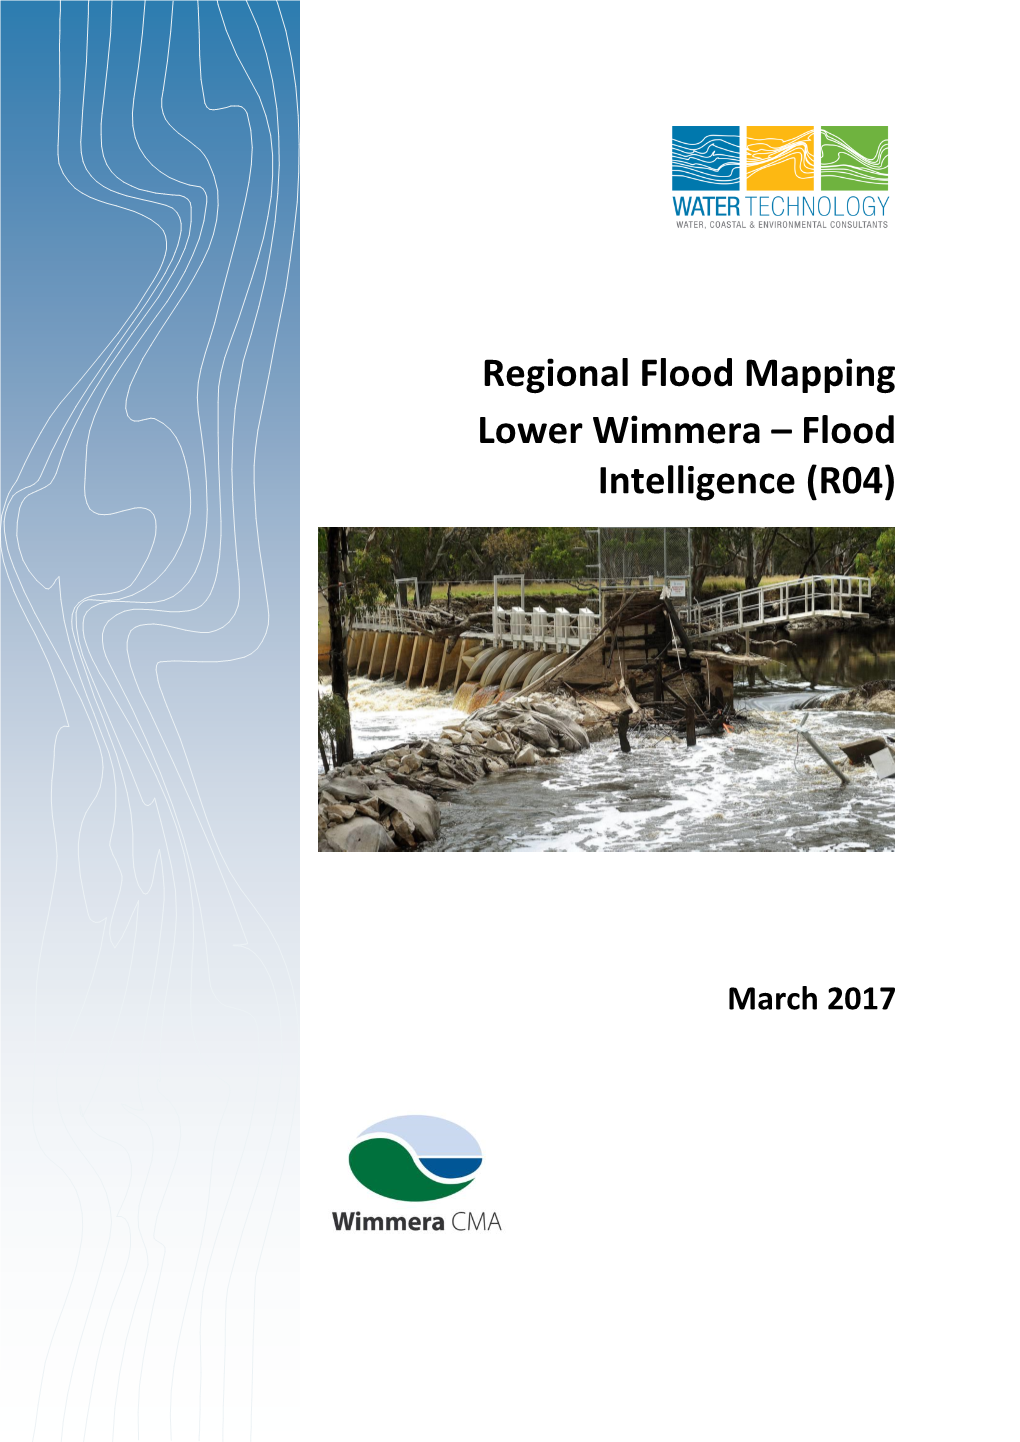 Regional Flood Mapping Lower Wimmera – Flood Intelligence (R04)